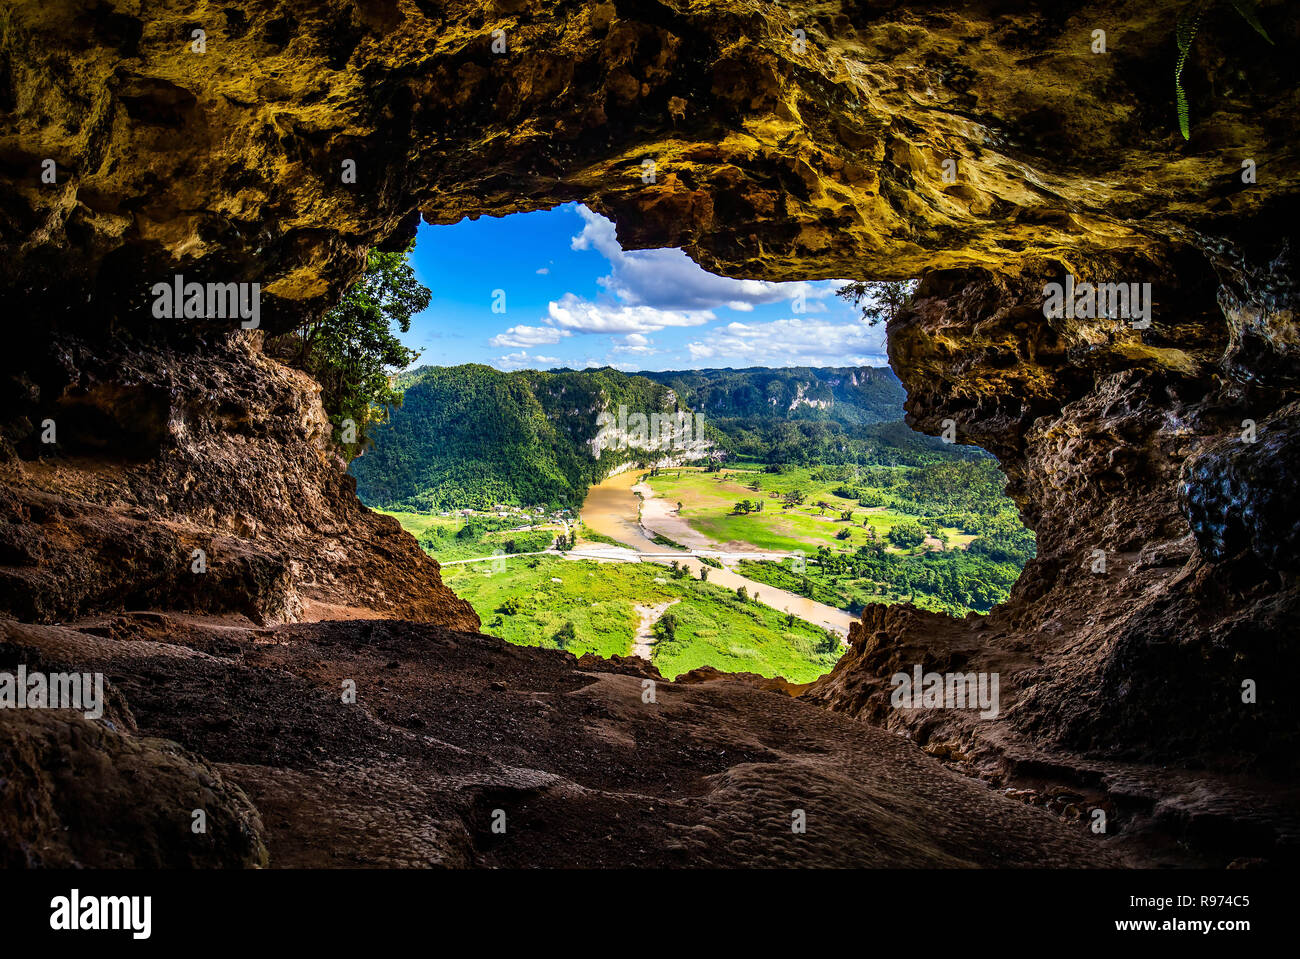 Ventana cave in Puerto Rico attraction Photo - Alamy